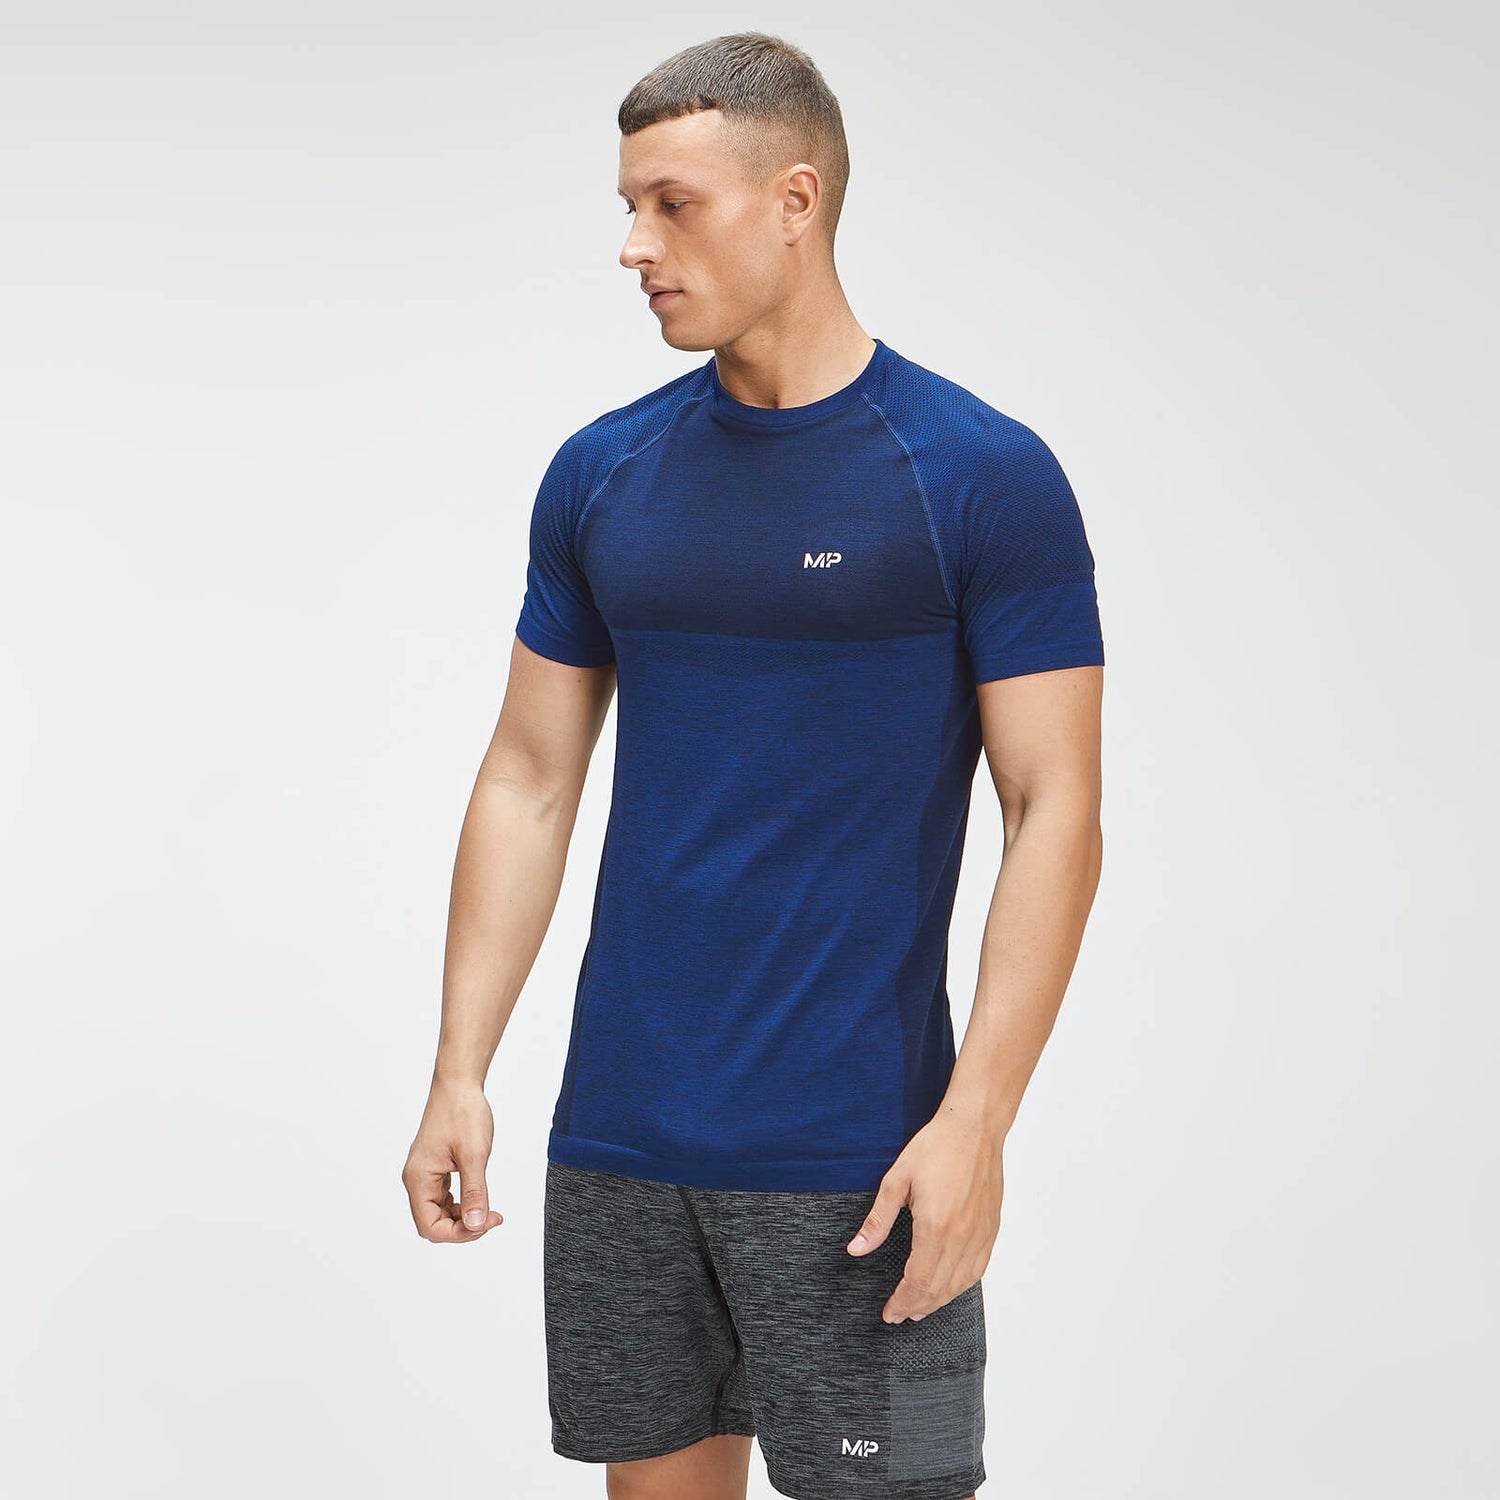 MP Herren Essential Seamless Kurzarm-T-Shirt — Intensives Blau Mergel